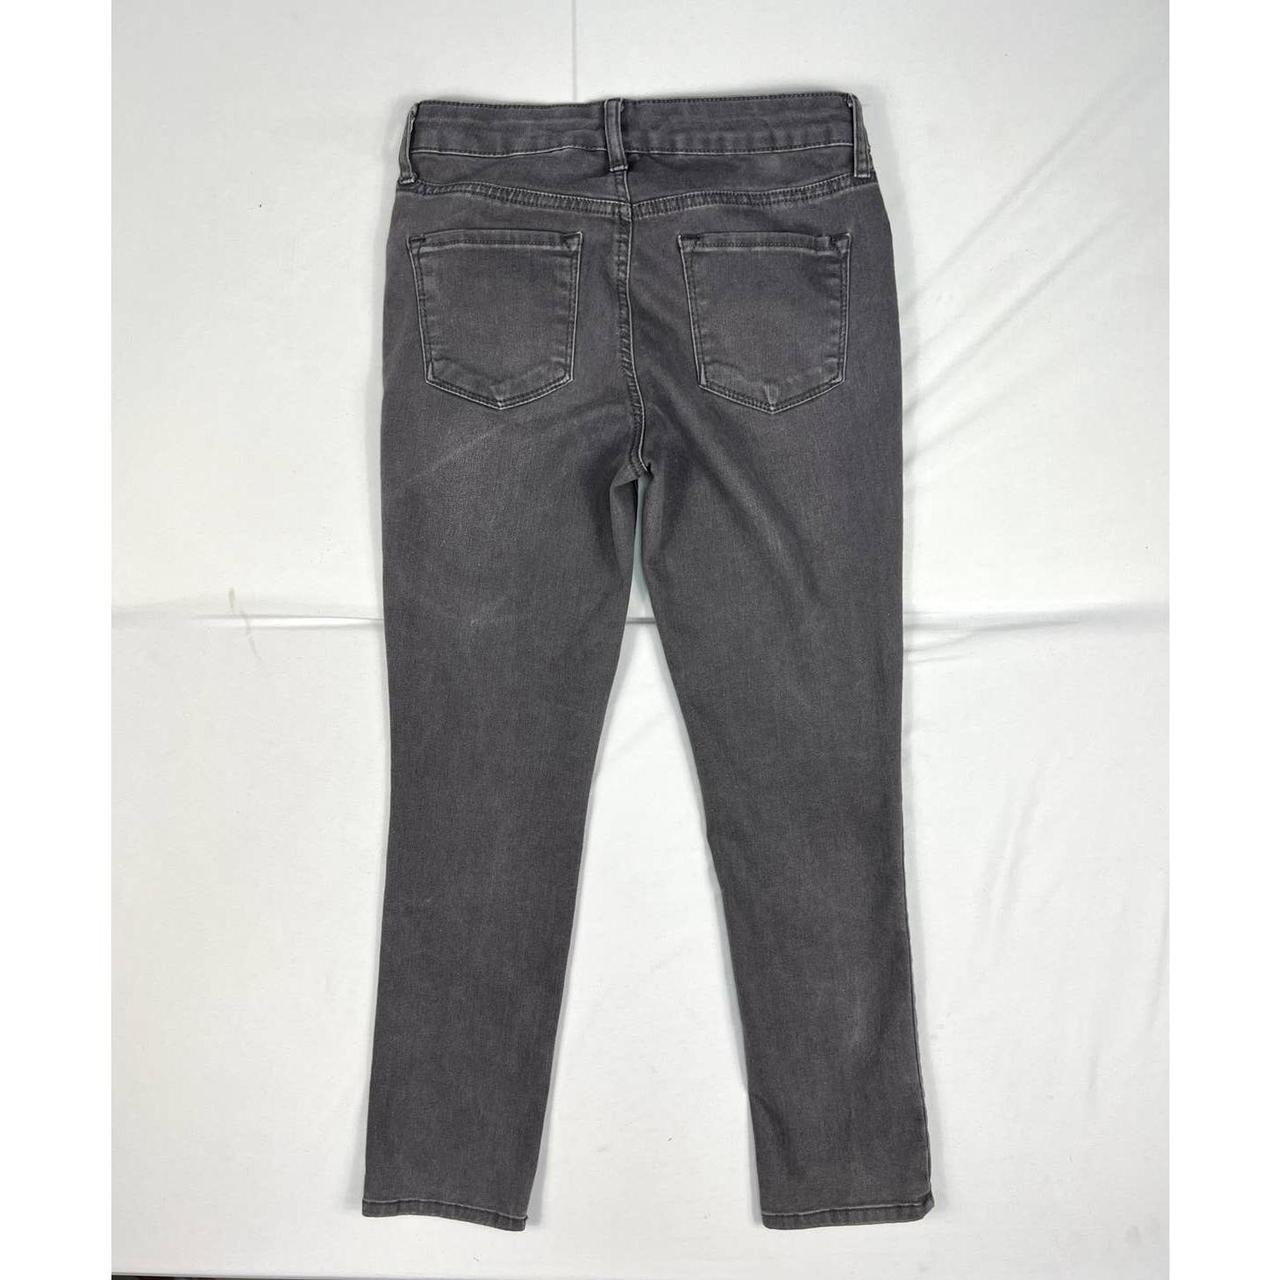 Women's Skinny Jeans 4 Gloria Vanderbilt Slimming... - Depop